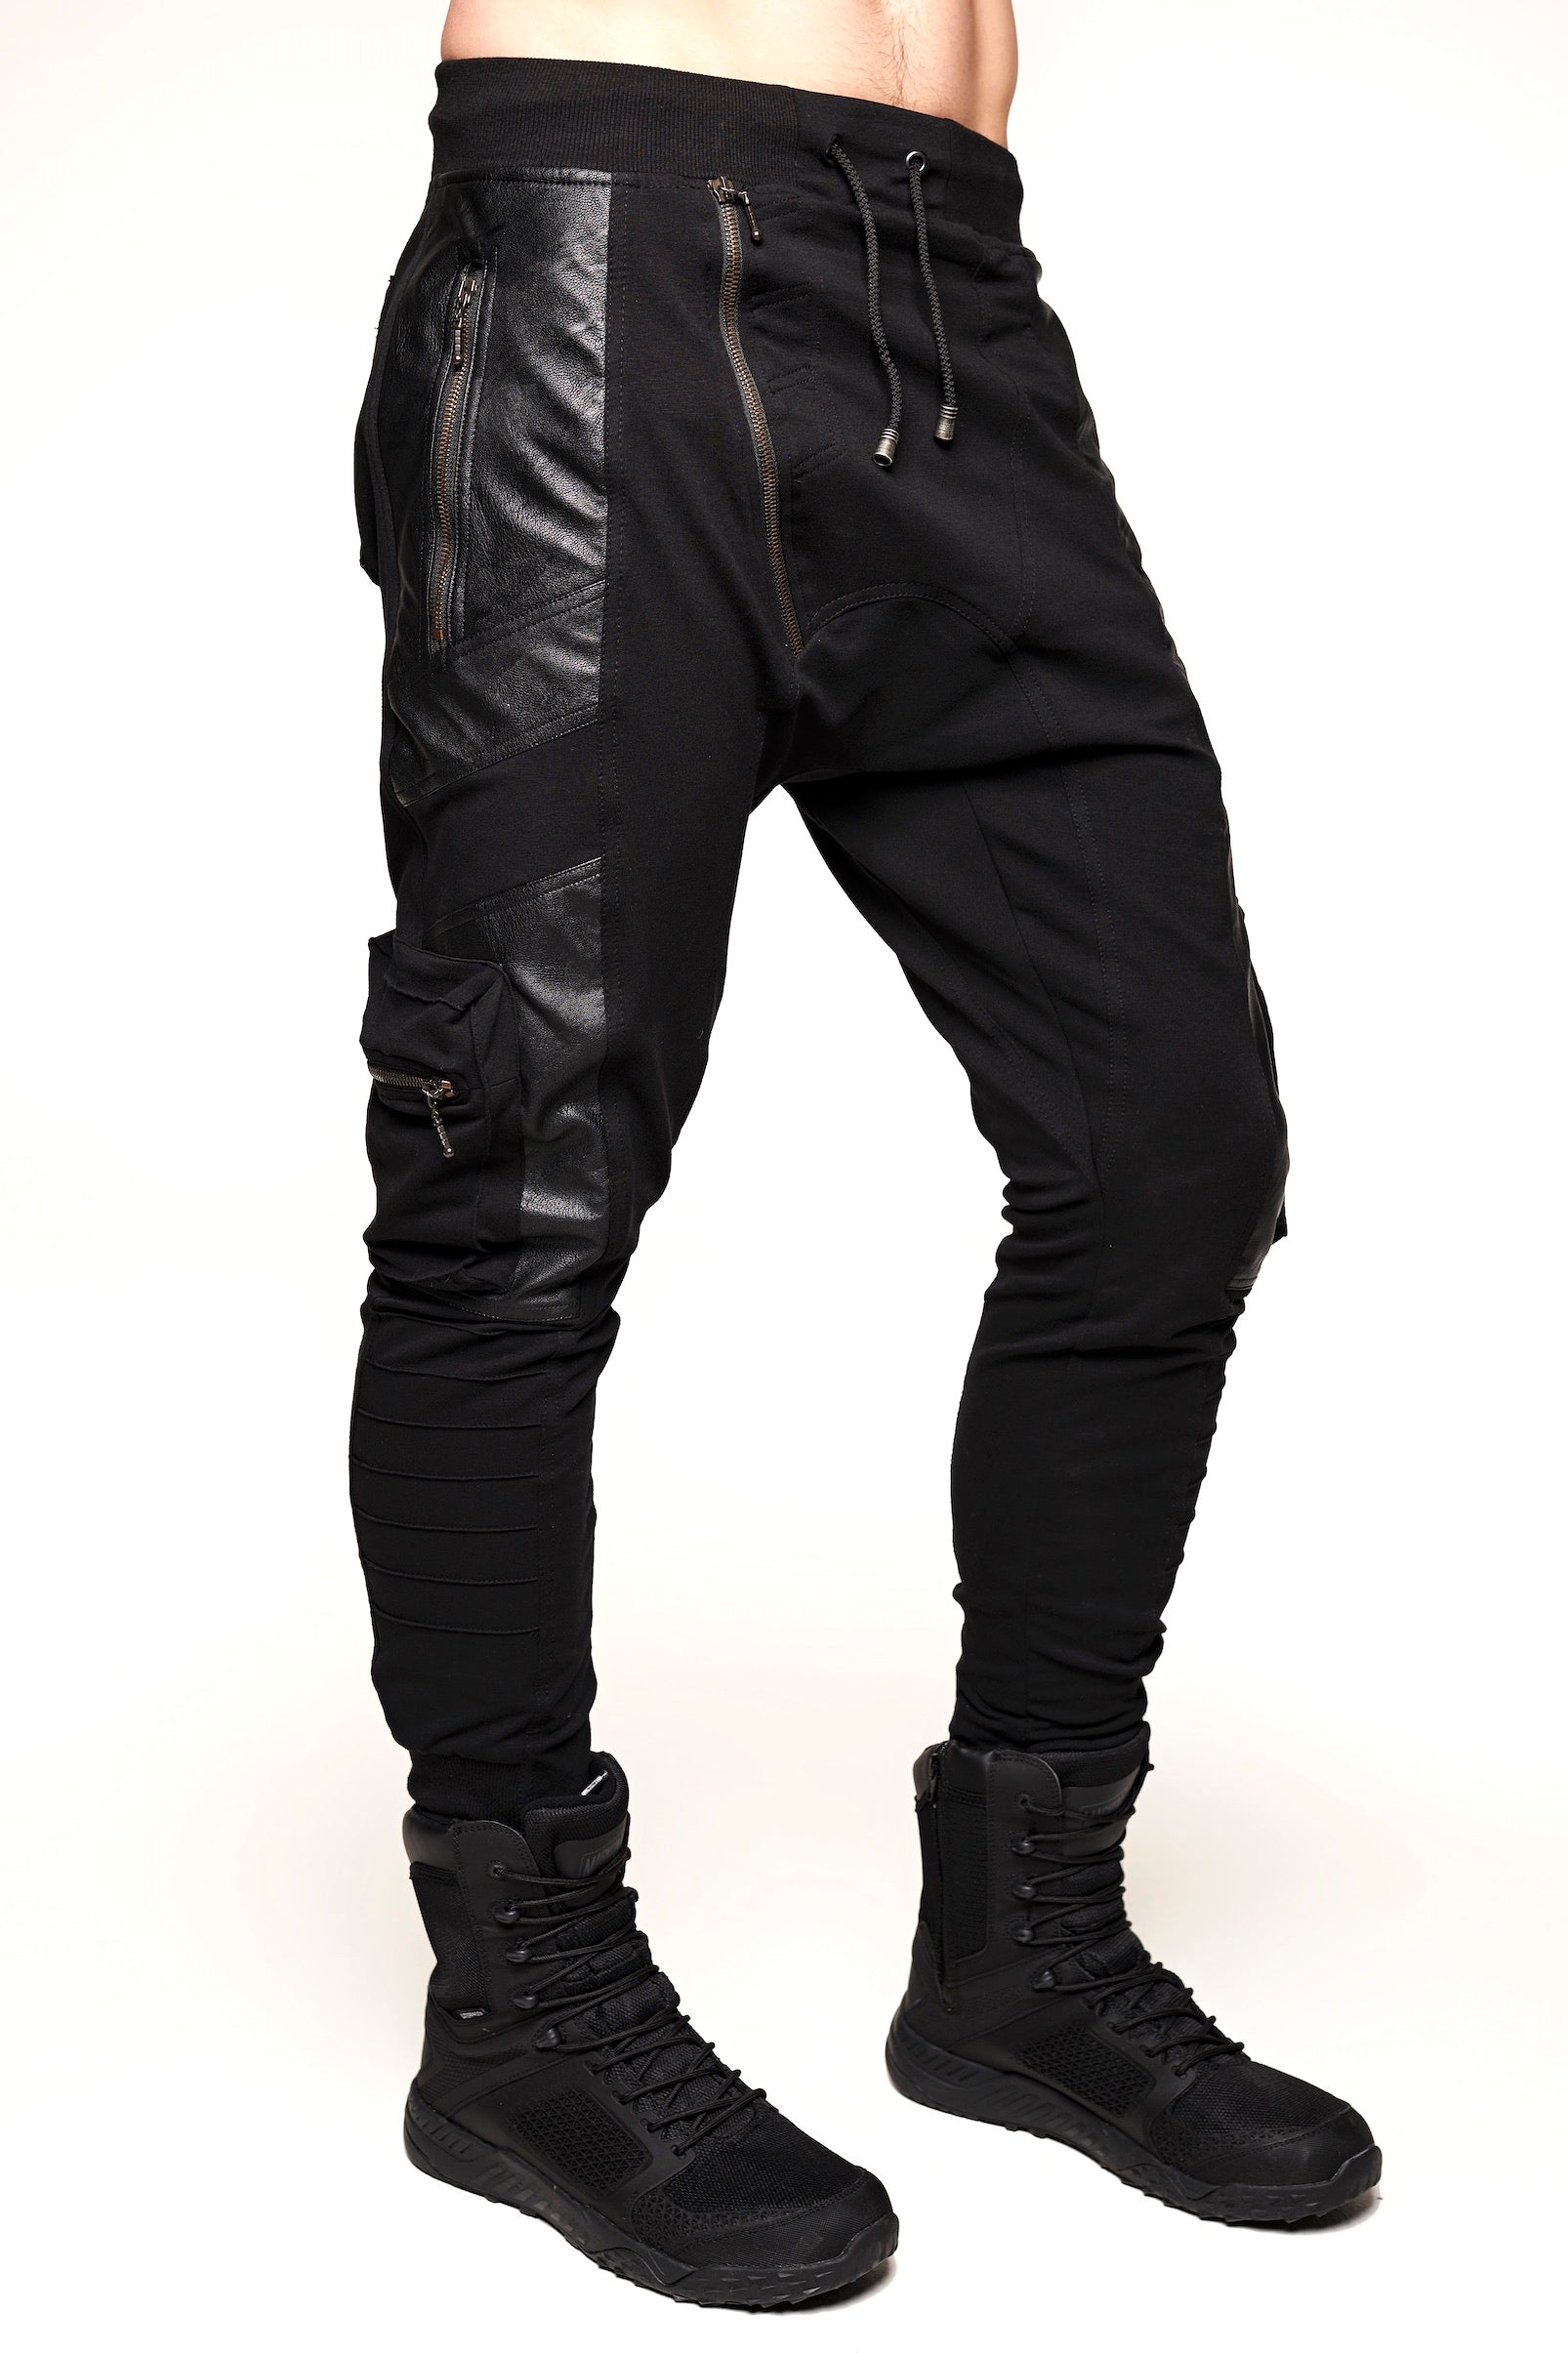 Galaxy Pants Leather- Black